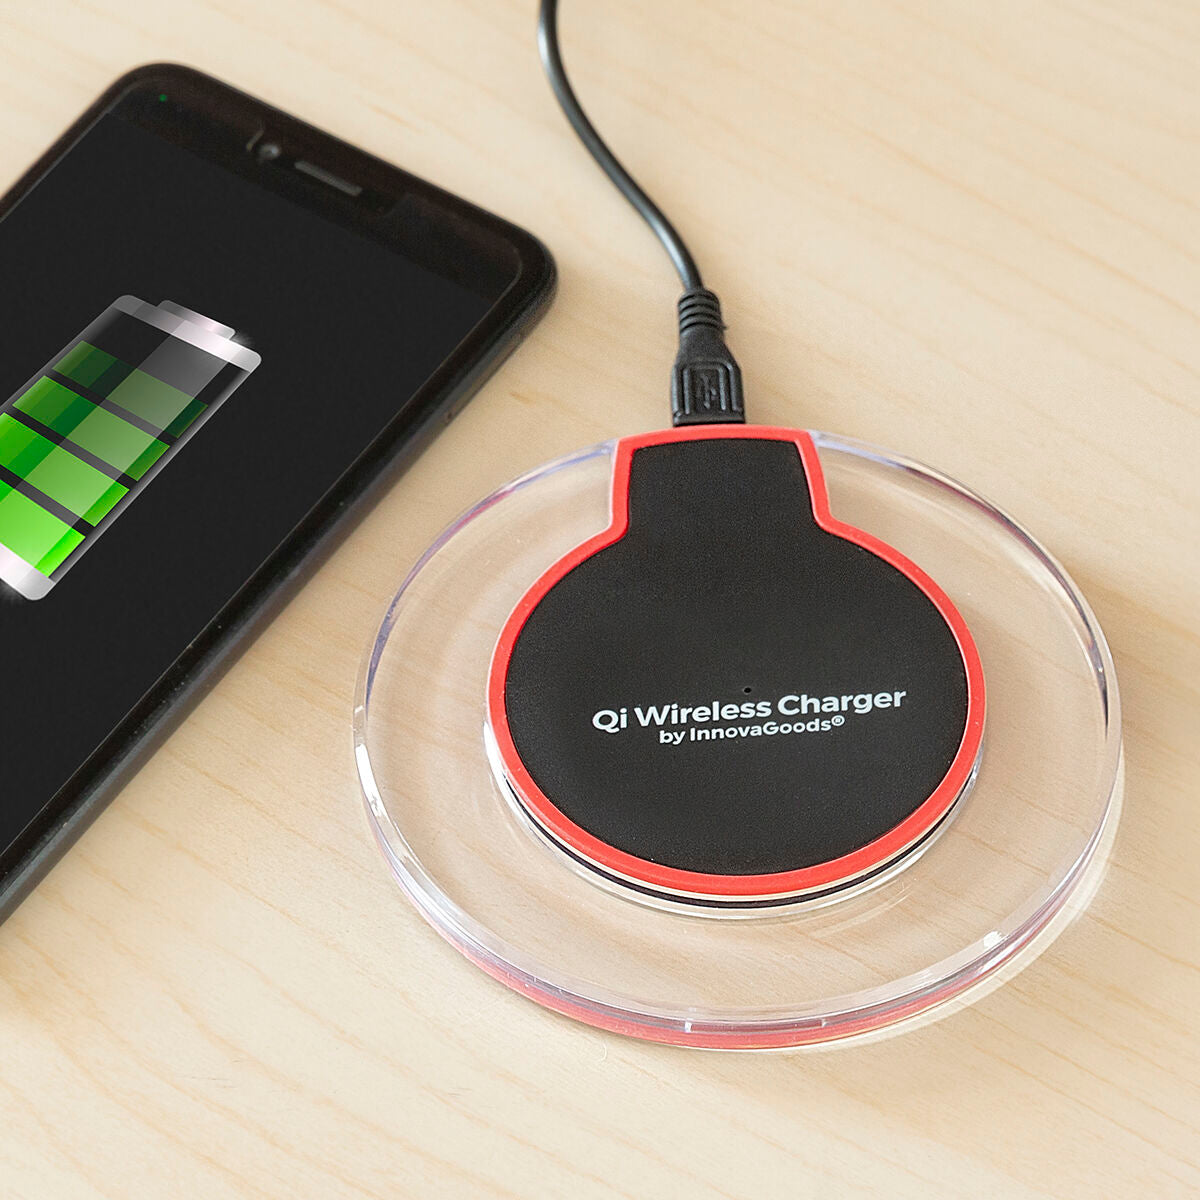 Wireless Smartphone Qi Ladegerät InnovaGoods - CA International 